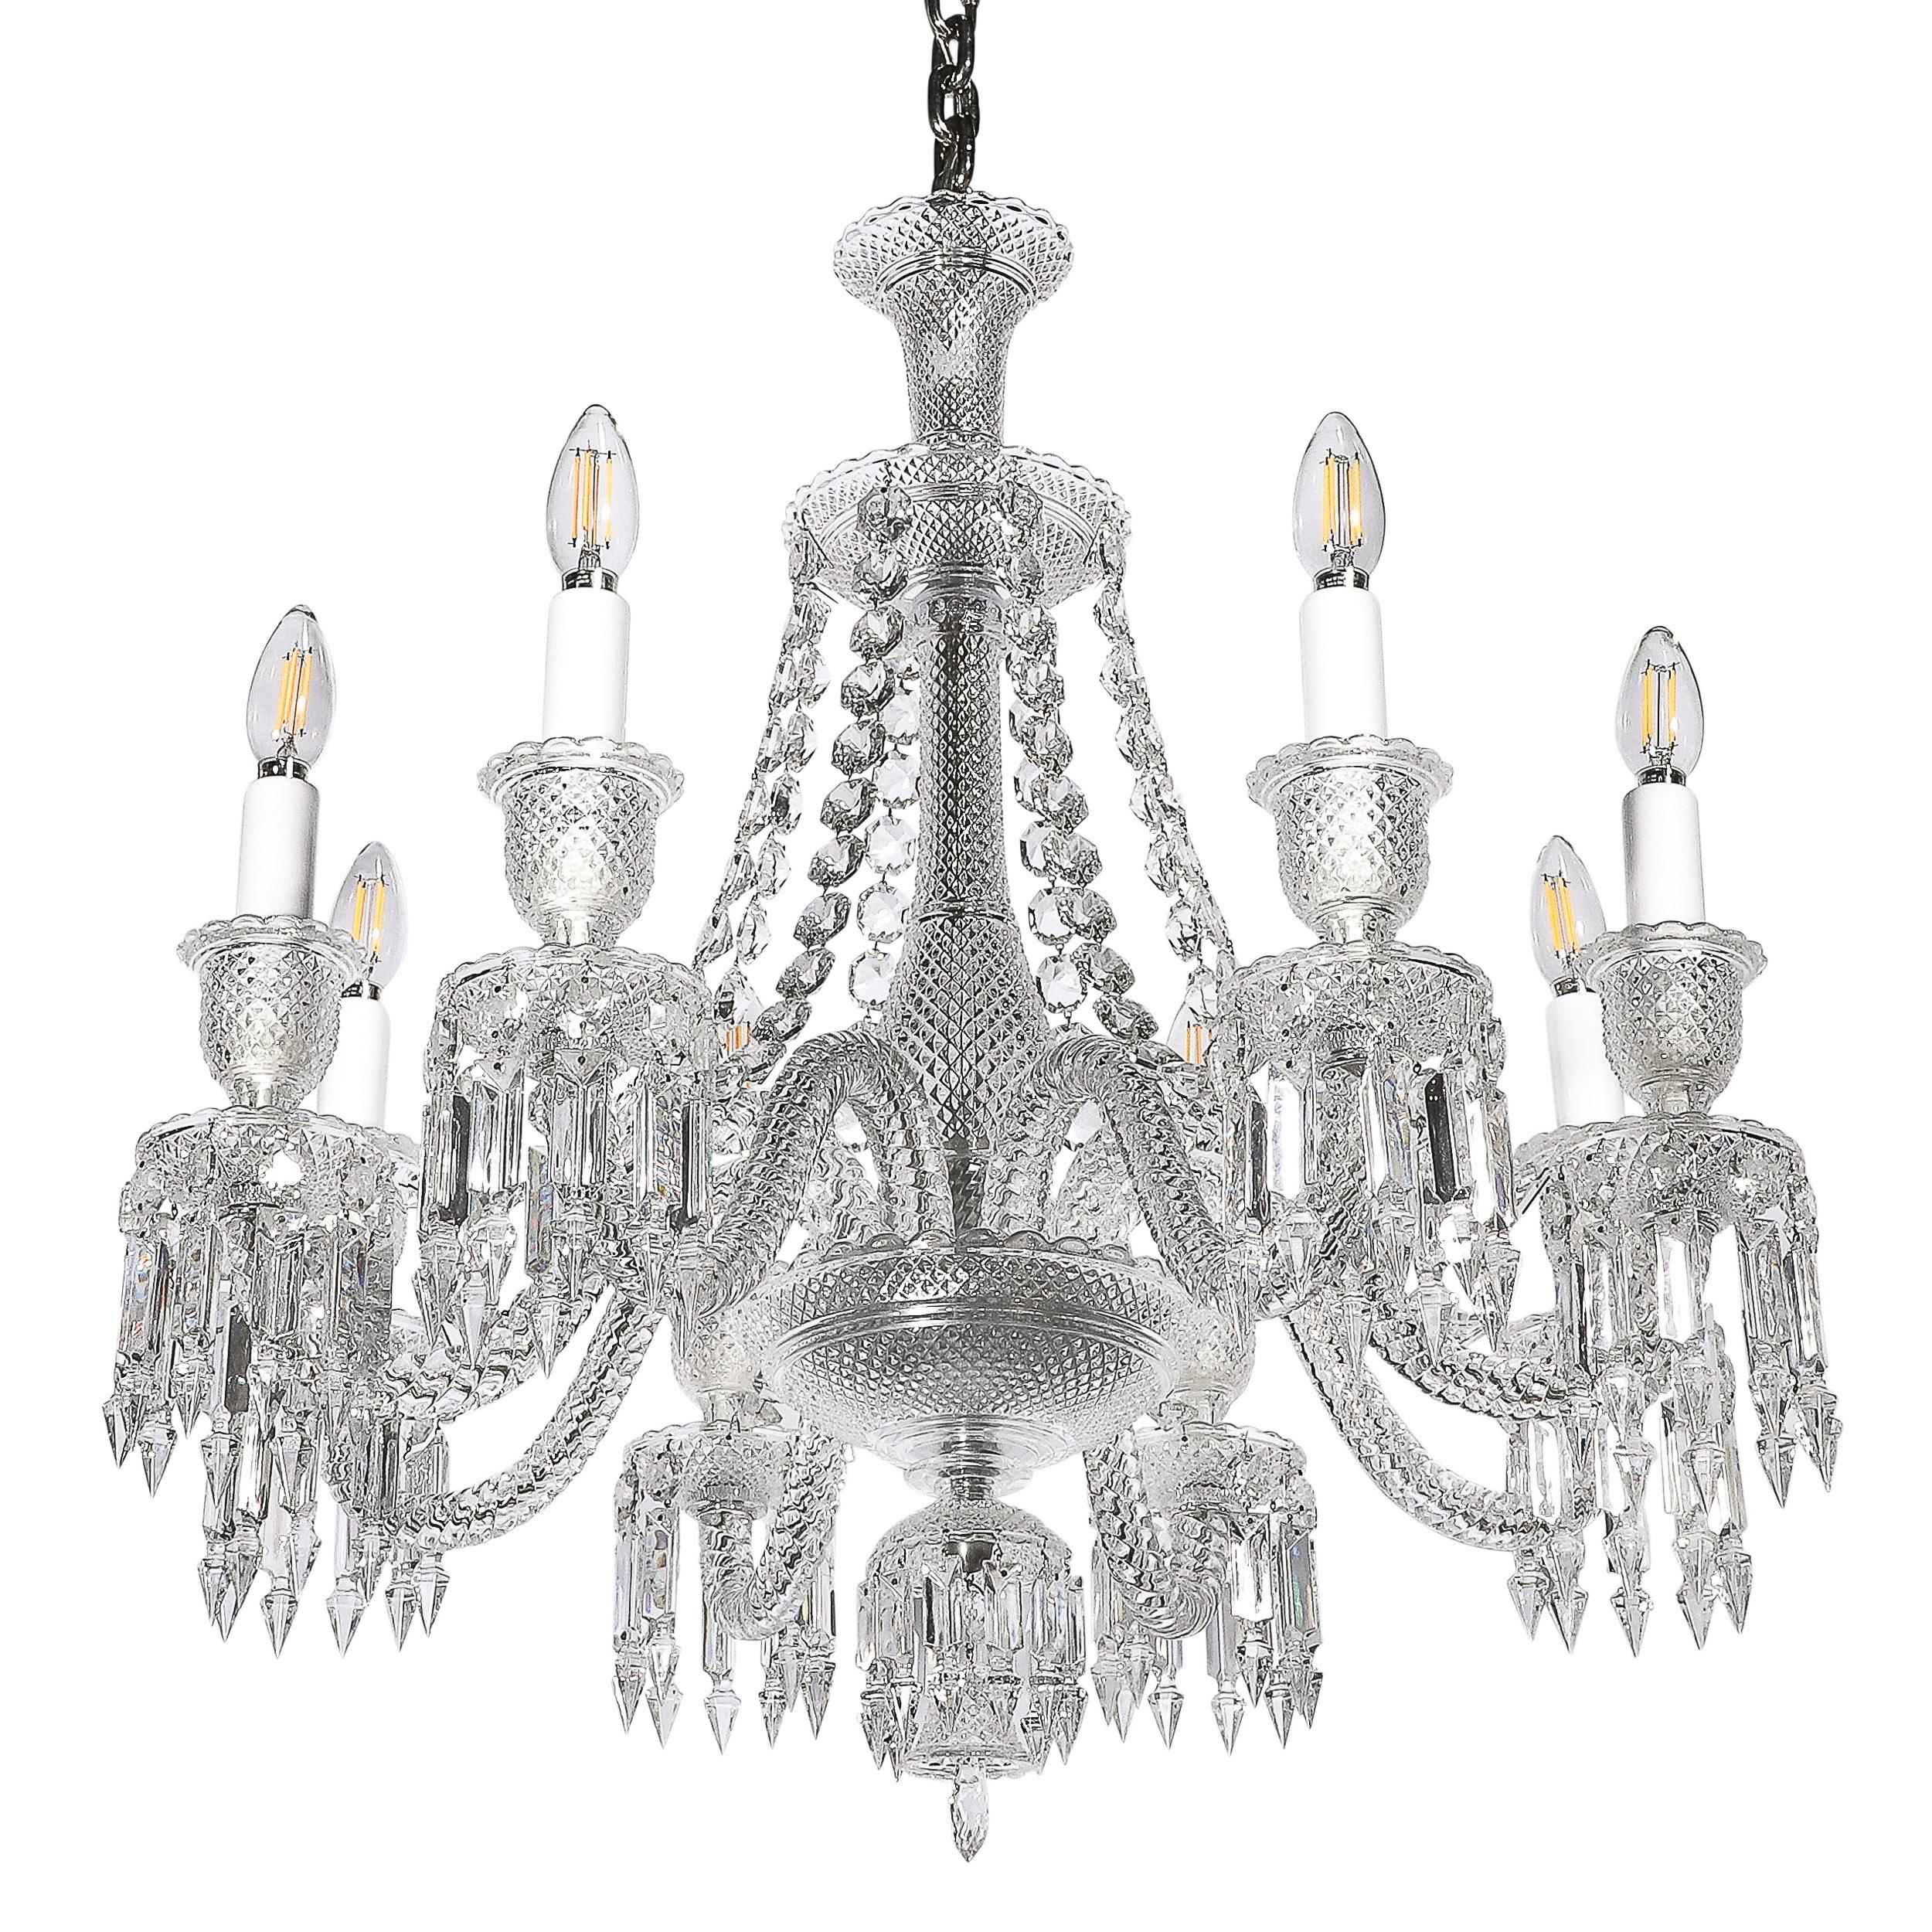 This breathtaking Mid-Century Modernist Eight Light Crystal 